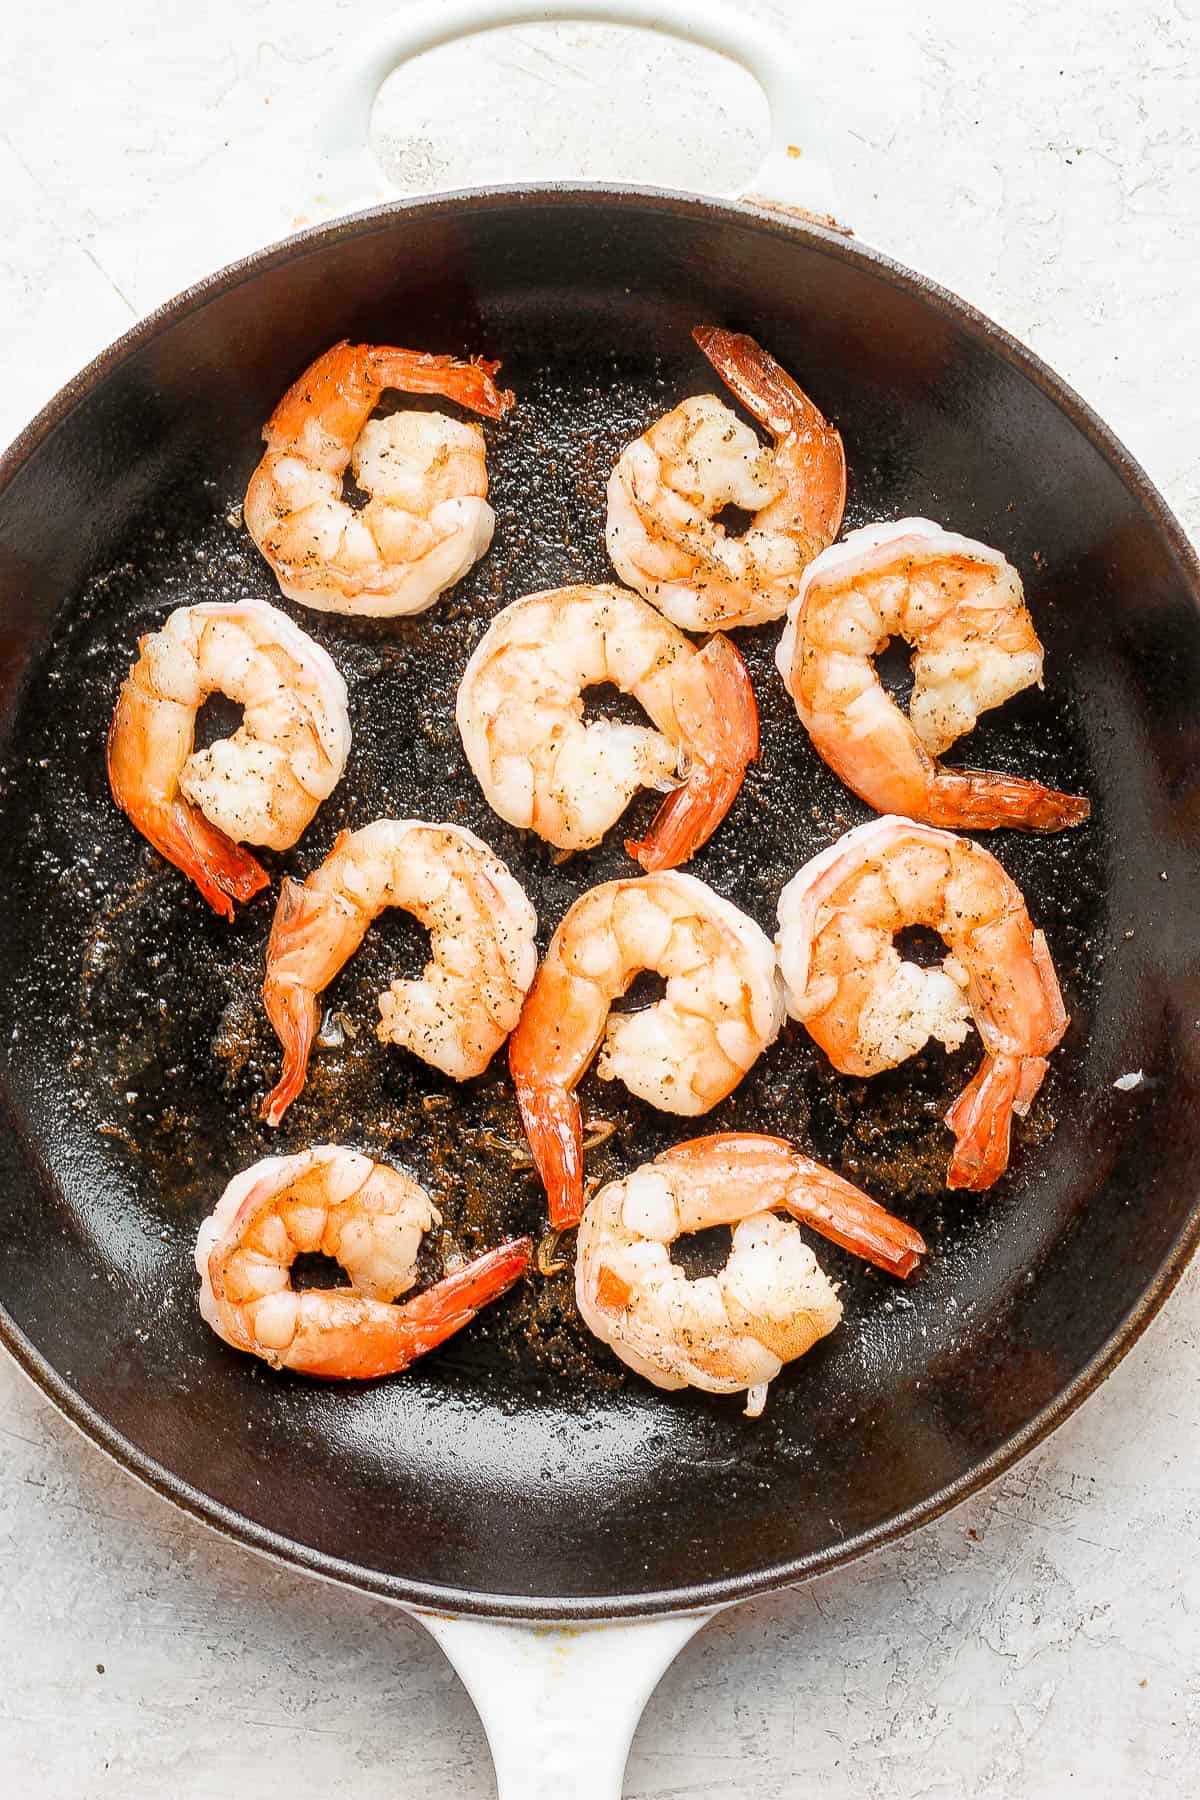 Pan fried shrimp in a cast iron pan.